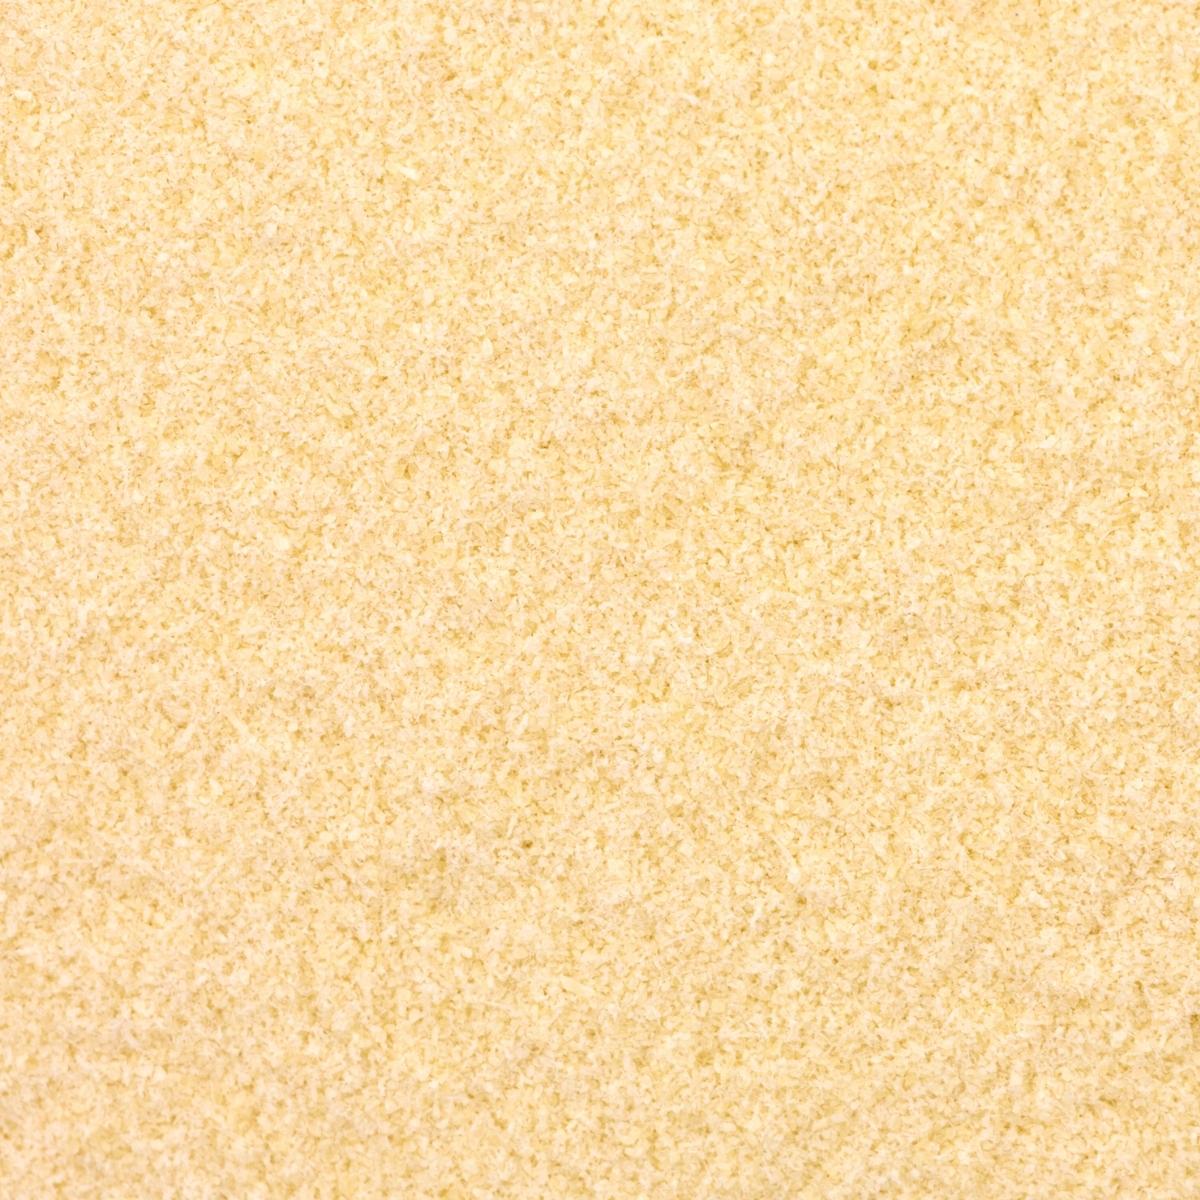 A close macro shot of xanthan gum powder.